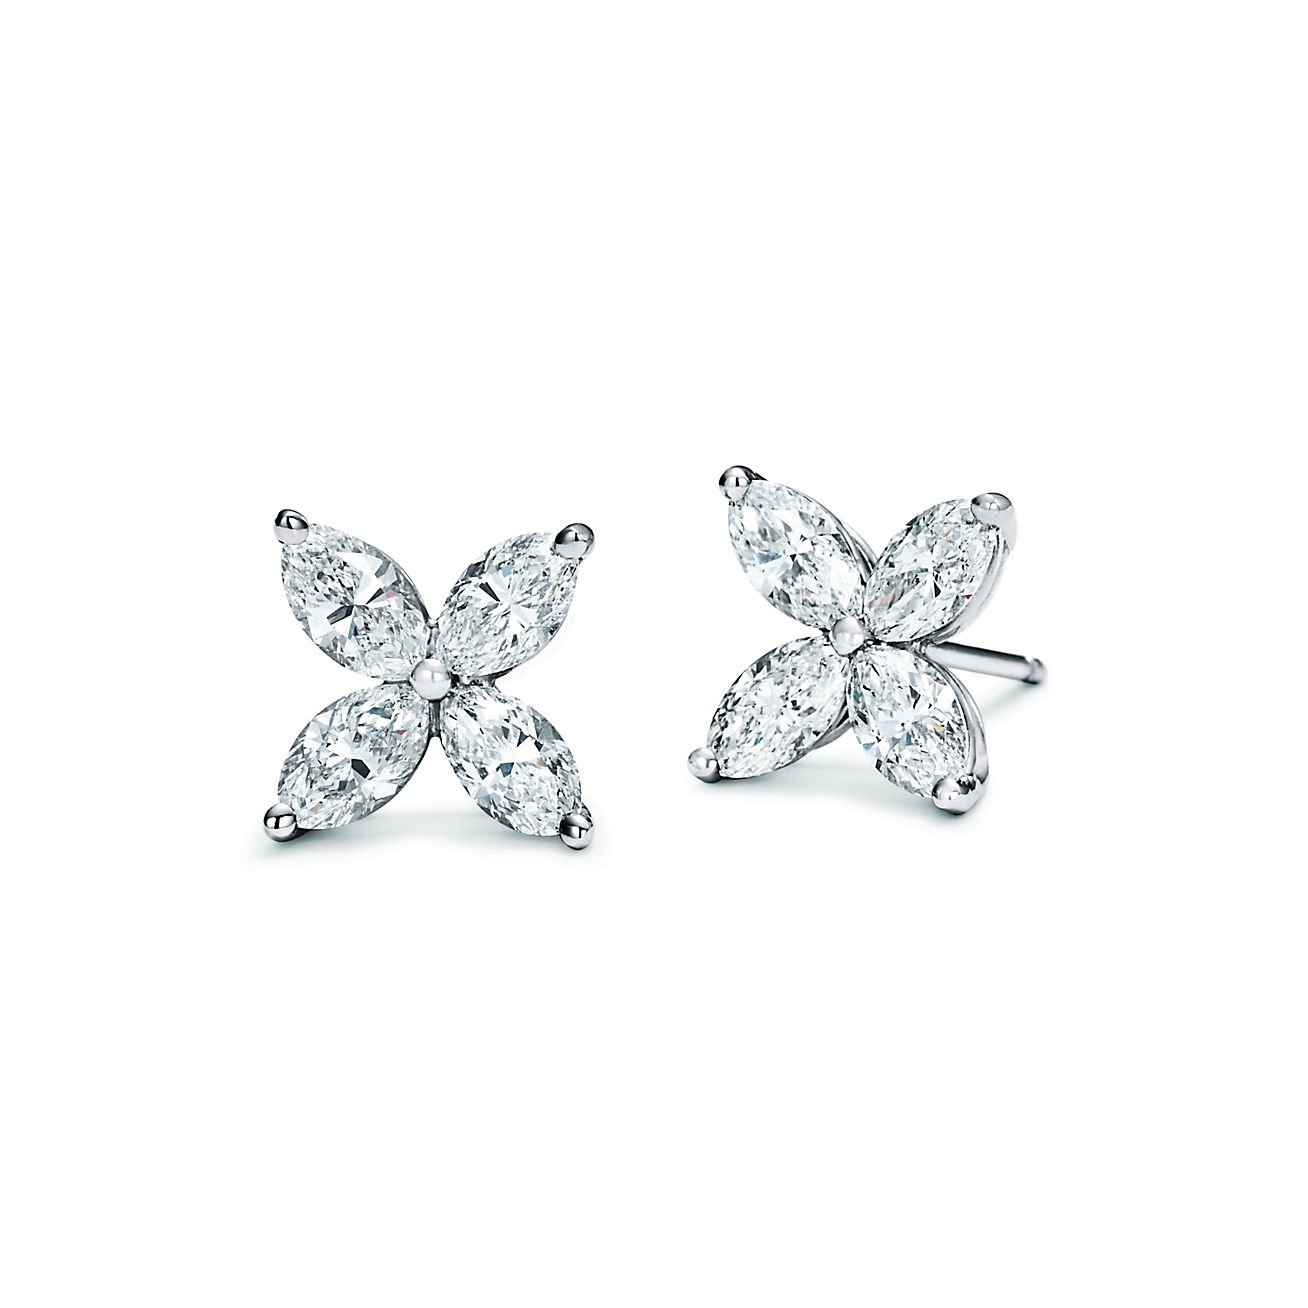 Tiffany Victoria™ earrings in platinum 